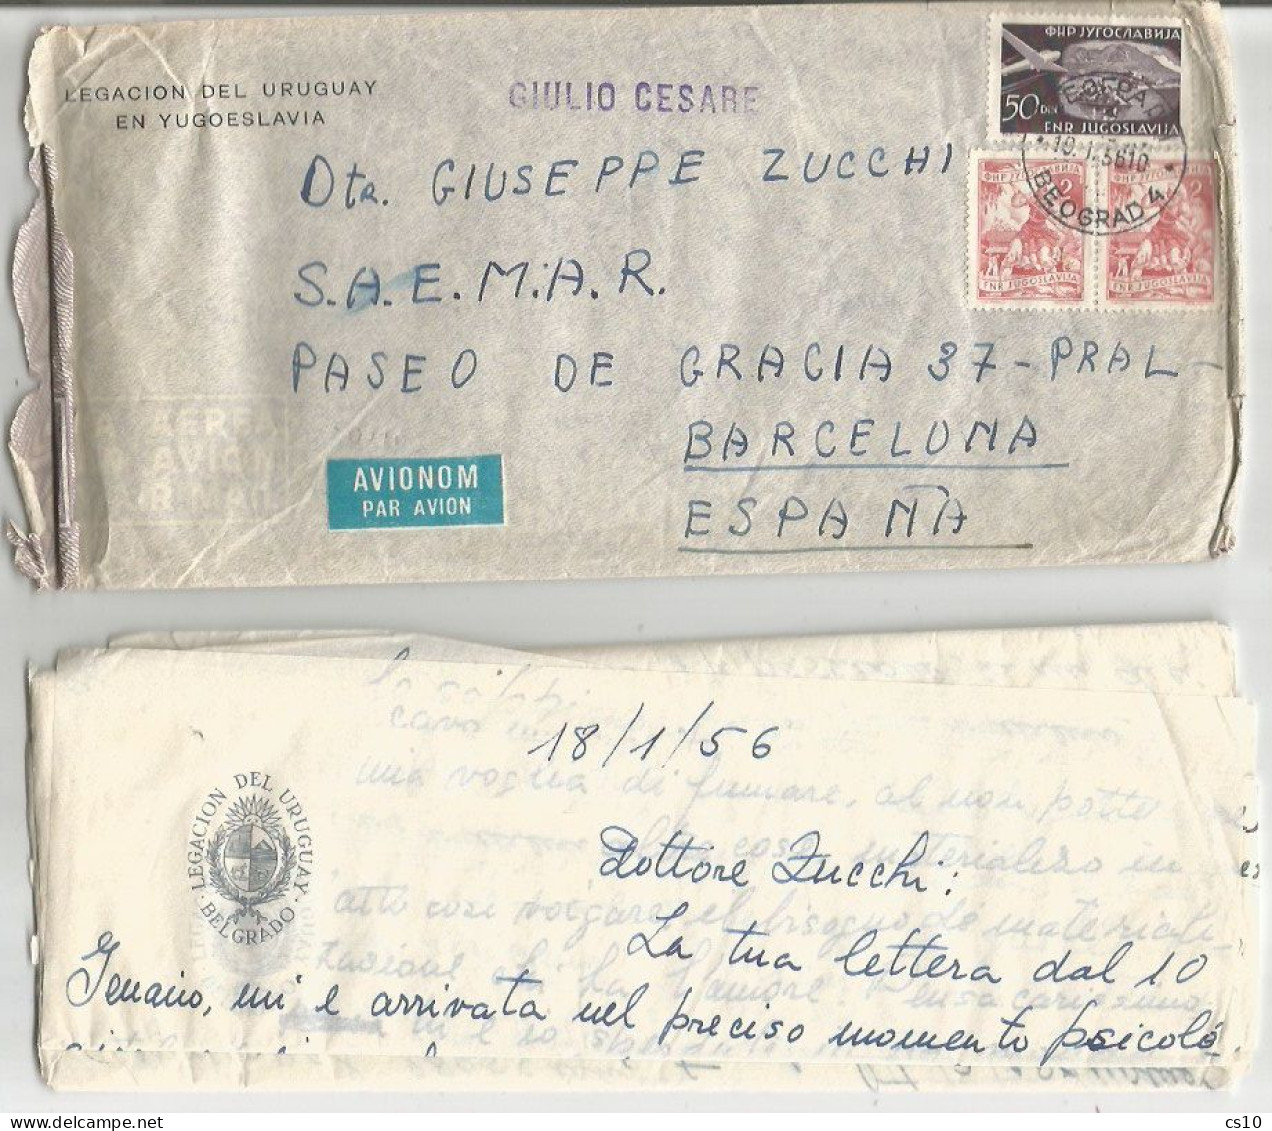 Jugoslavija Legation Uruguay AirmailCV Beograd 19jan1956 X Spain To S/S "Giulio Cesare" With Content (6pages) - Poste Aérienne